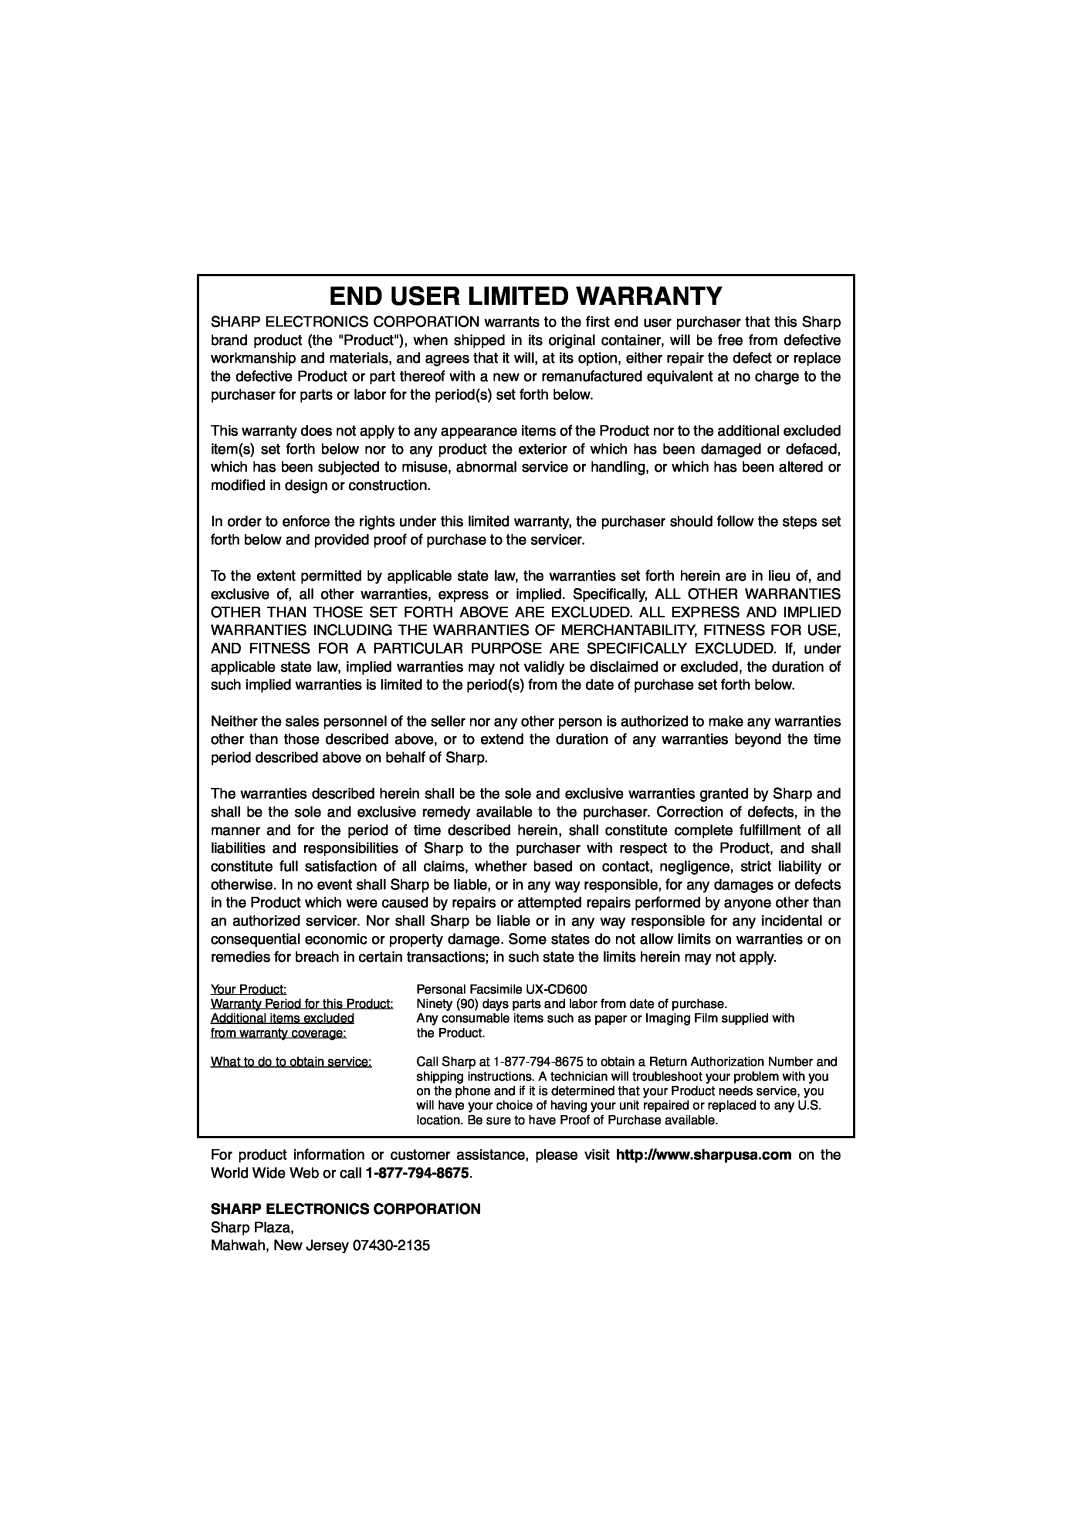 Sharp UX-CD600 operation manual End User Limited Warranty, Sharp Electronics Corporation 